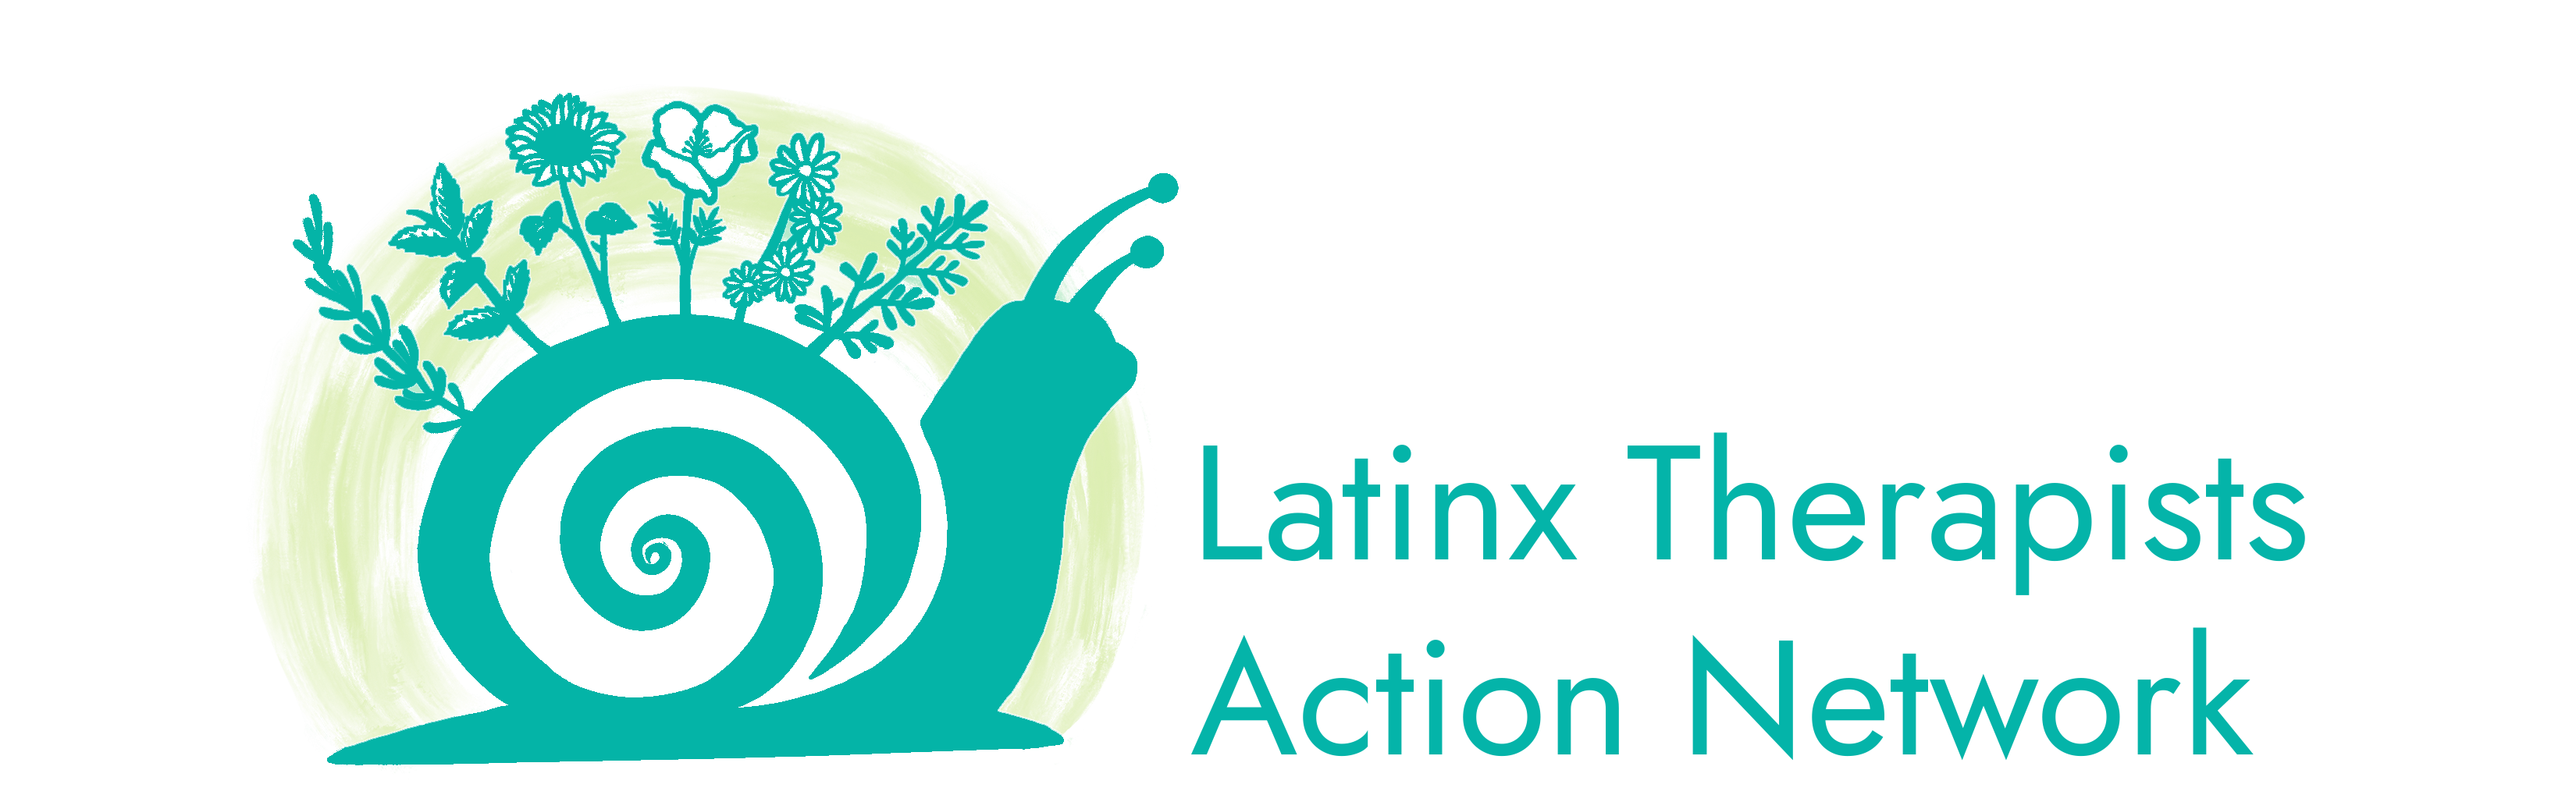 Latinx Therapists Action Network